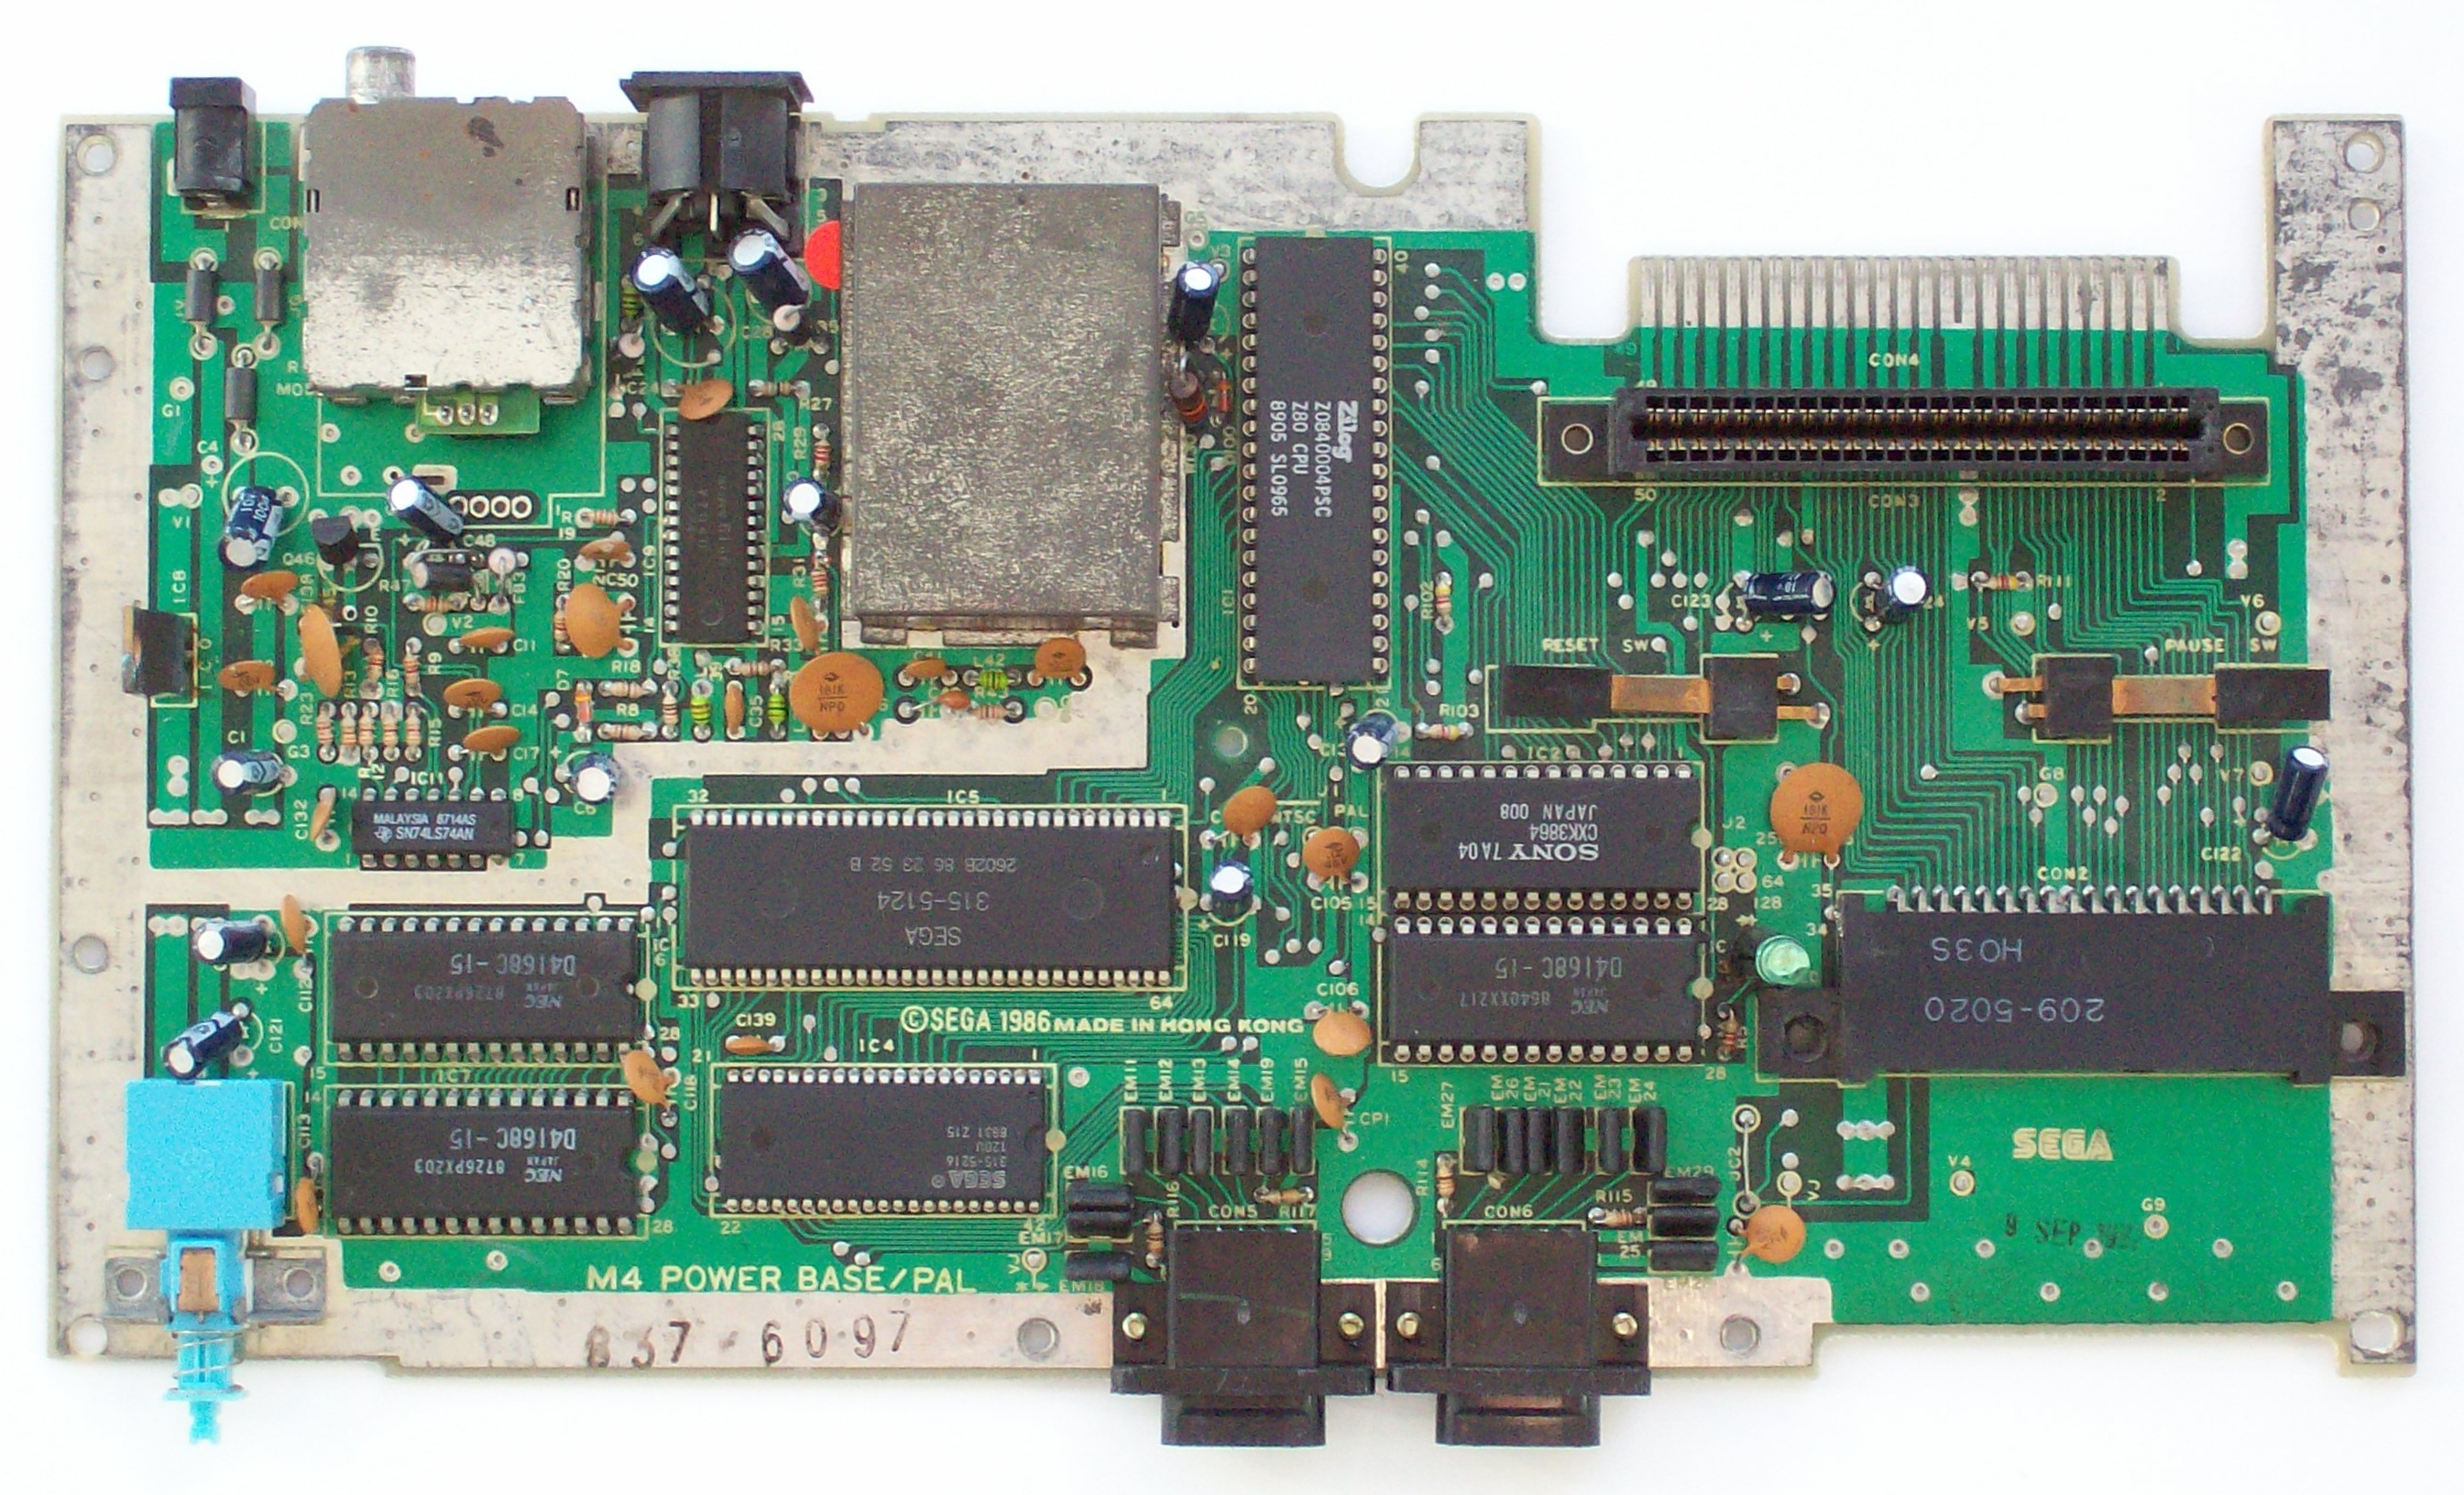 SMS 1 NTSC 50hz  PALMasterSystemM4POWERBASEPAL837-6097-Component